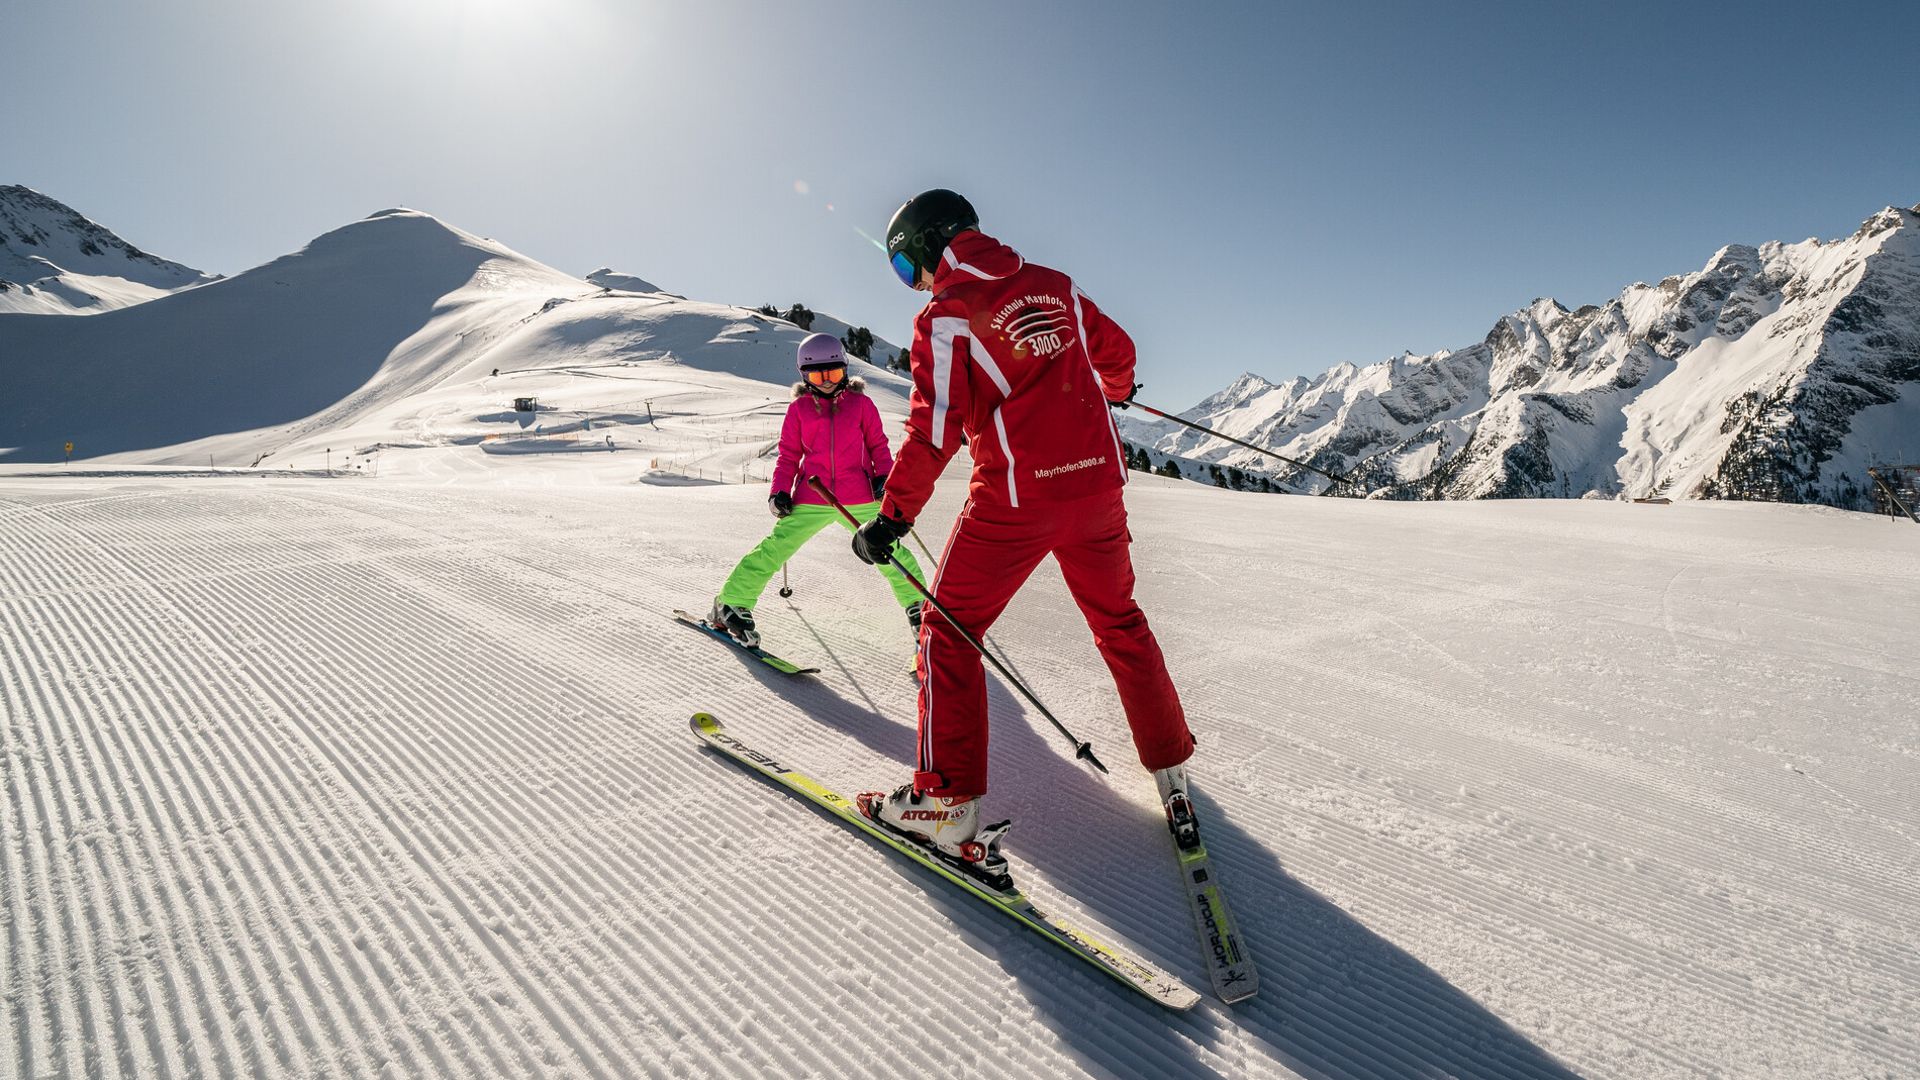 Ski lesson on Mount Ahorn